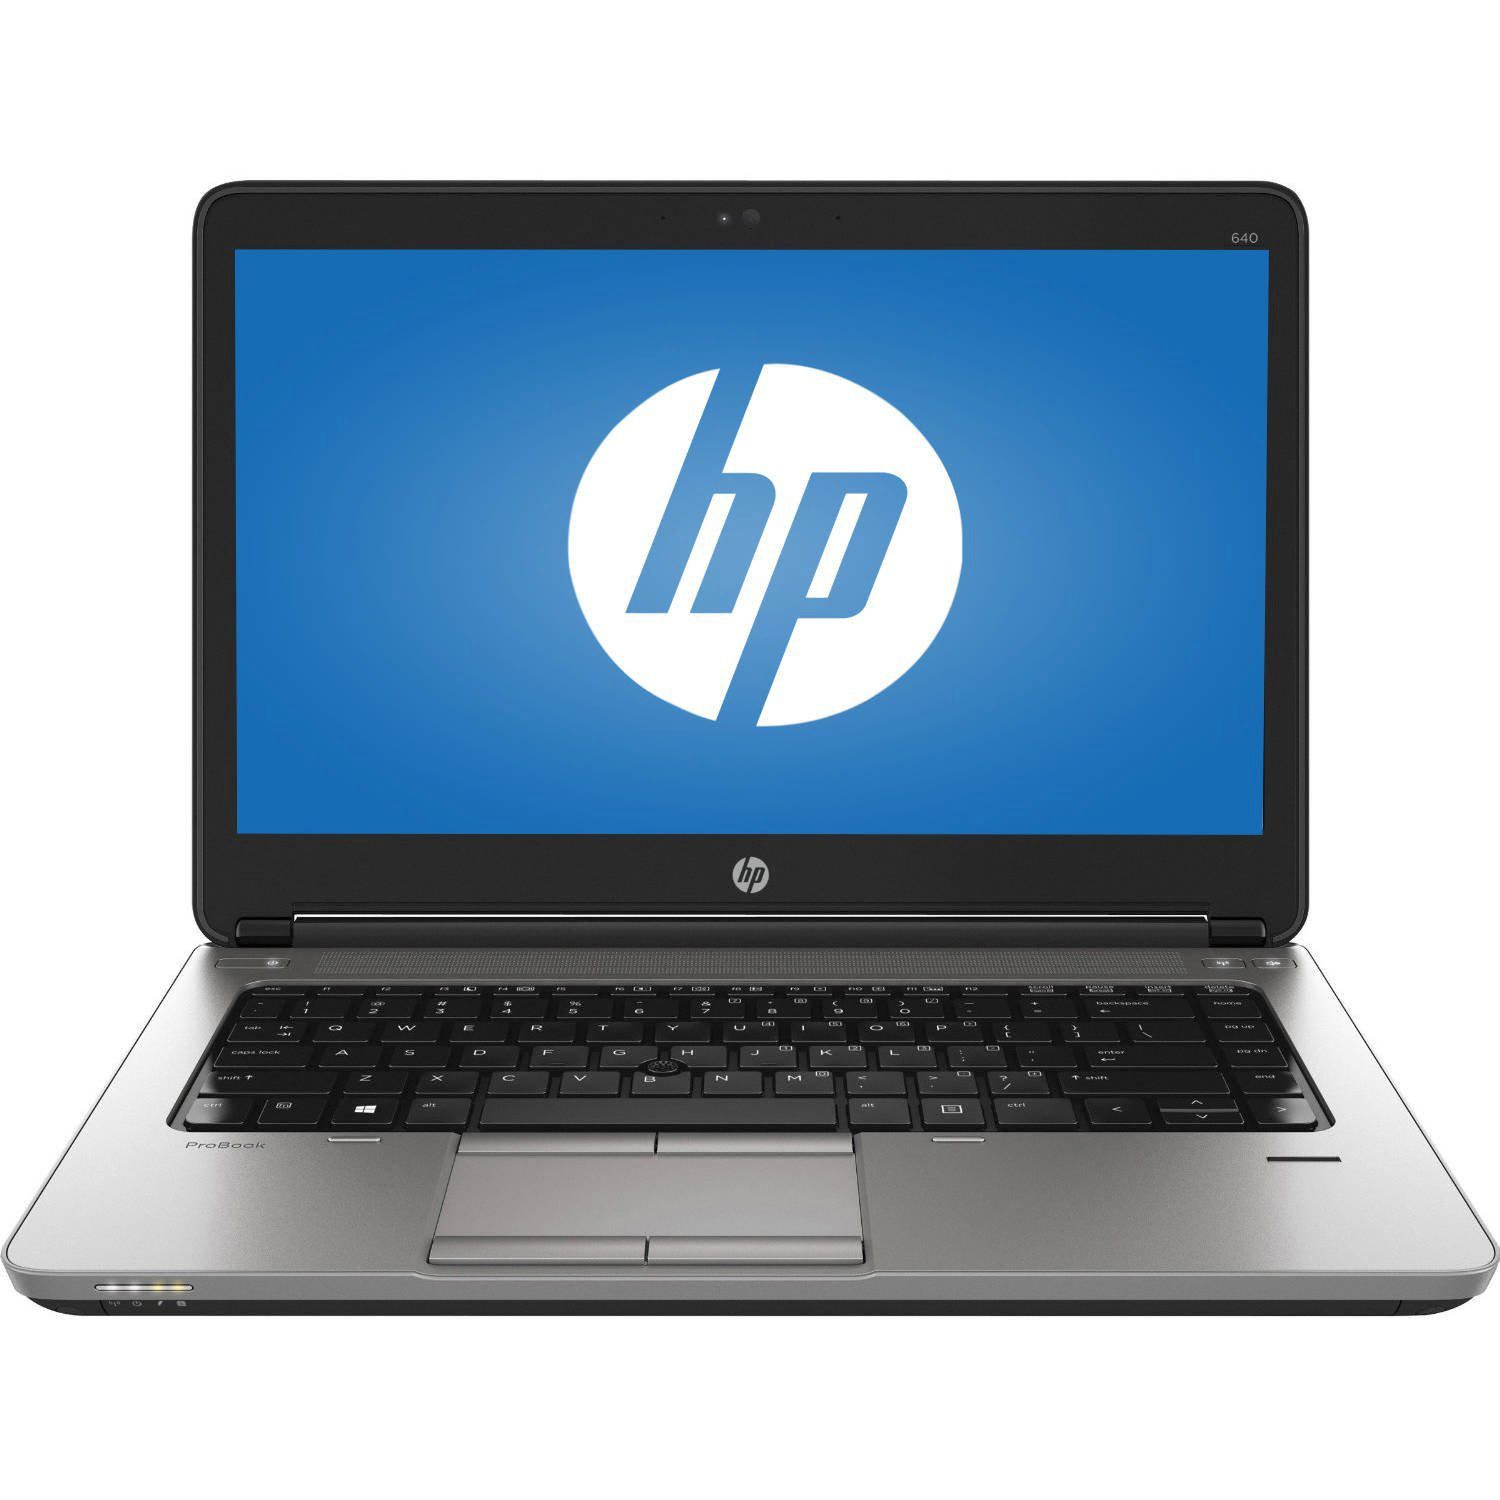 Refurbished Hp Probook 640 G1 14” Laptop With Intel Core I5 4300m 26 Ghz Processor Walmart 8463